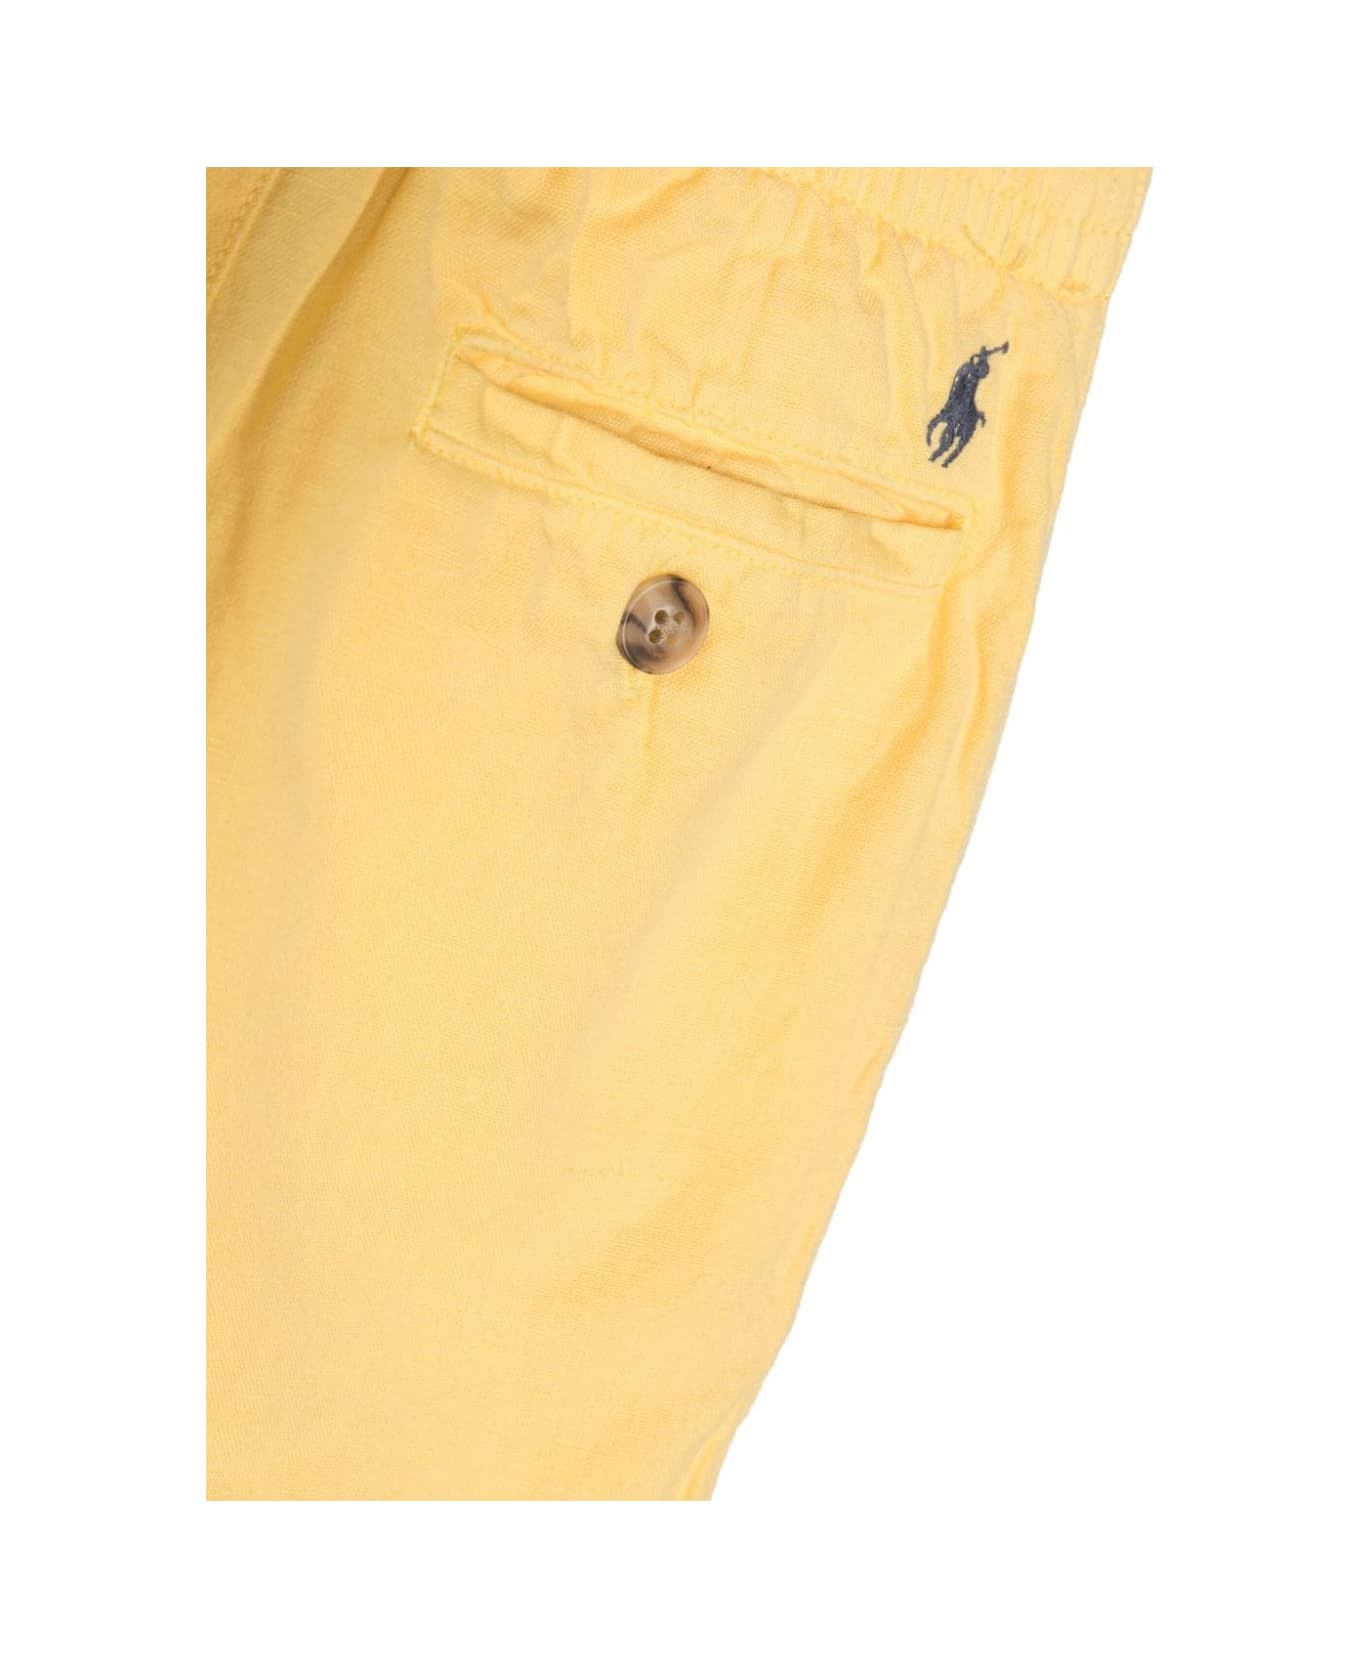 Ralph Lauren Yellow Linen And Cotton Bermuda Shorts - Yellow